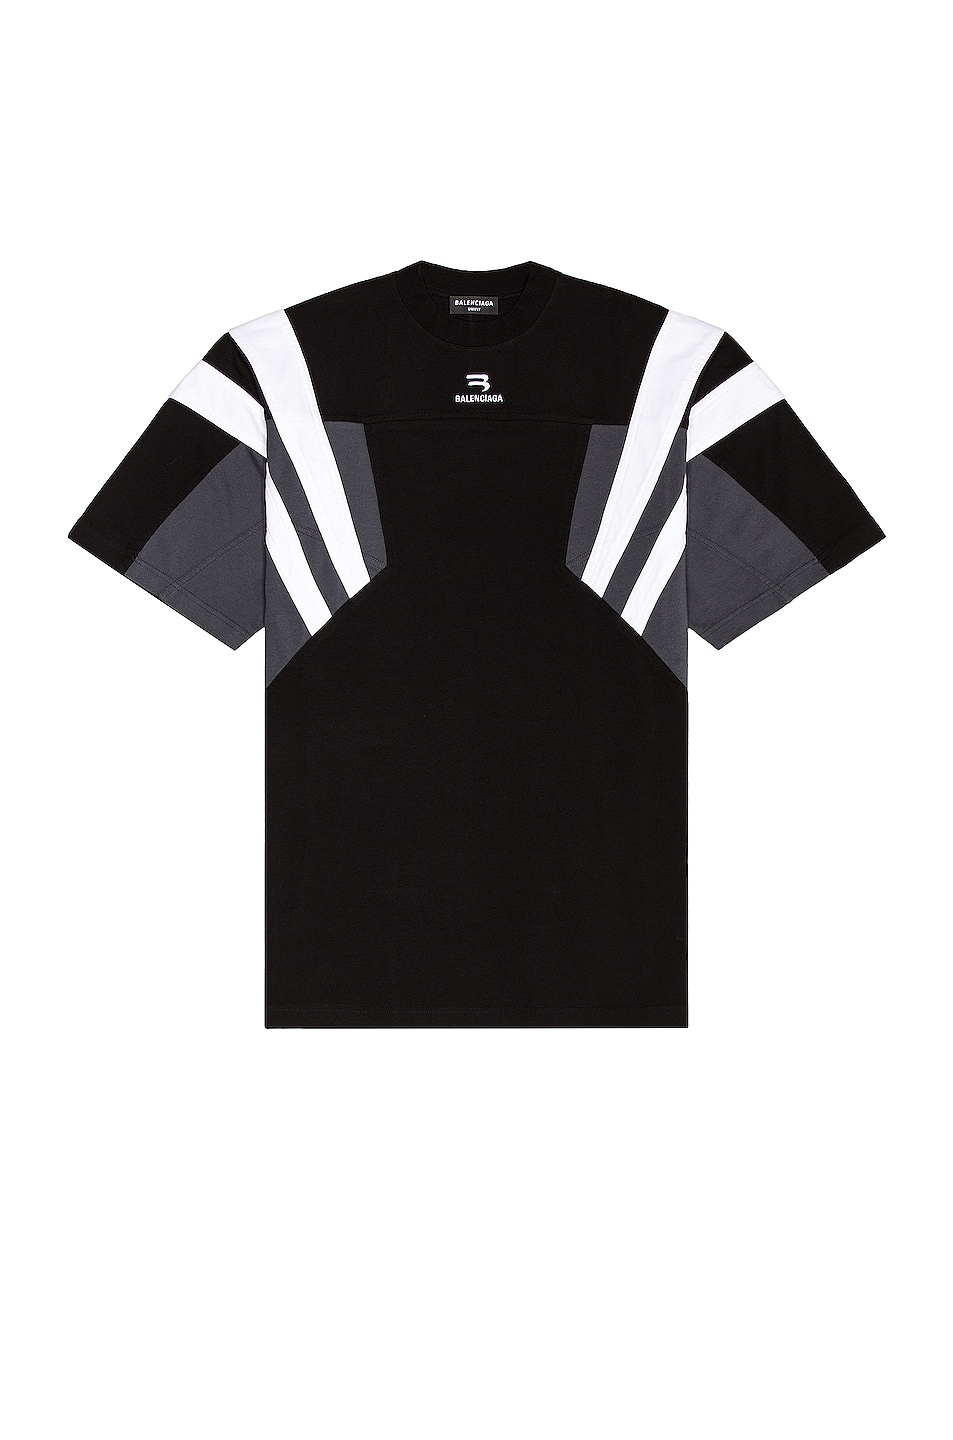 Image 1 of Balenciaga Tracksuit T-Shirt in Black, Dark Grey & White